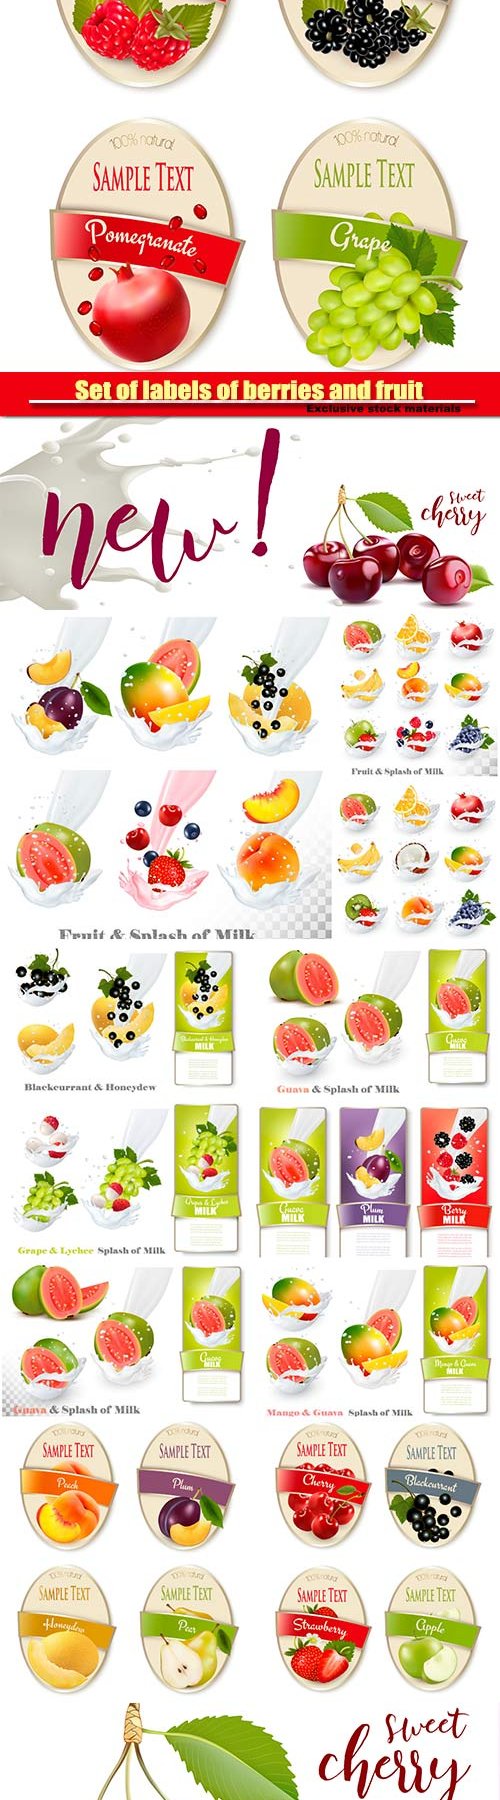 Set of labels of berries and fruit, fruit in a milk splash